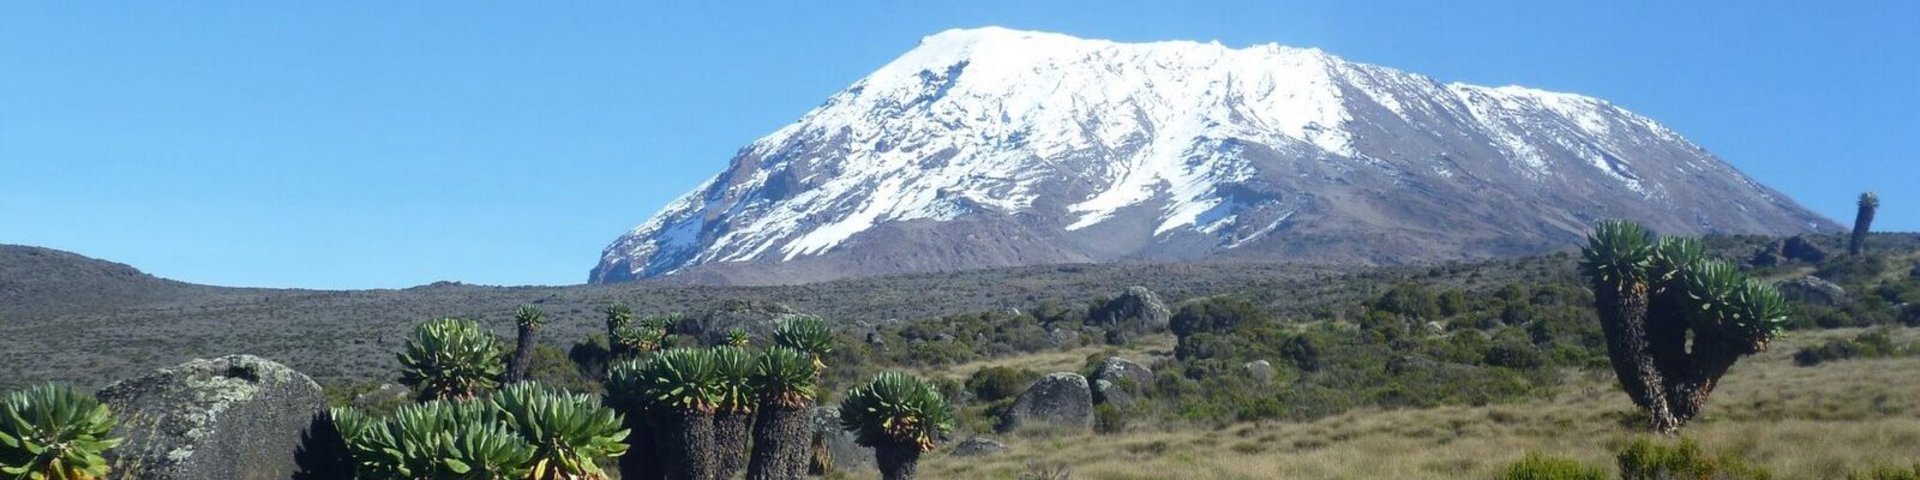 Kilimanjaro auf der Marangu-Route